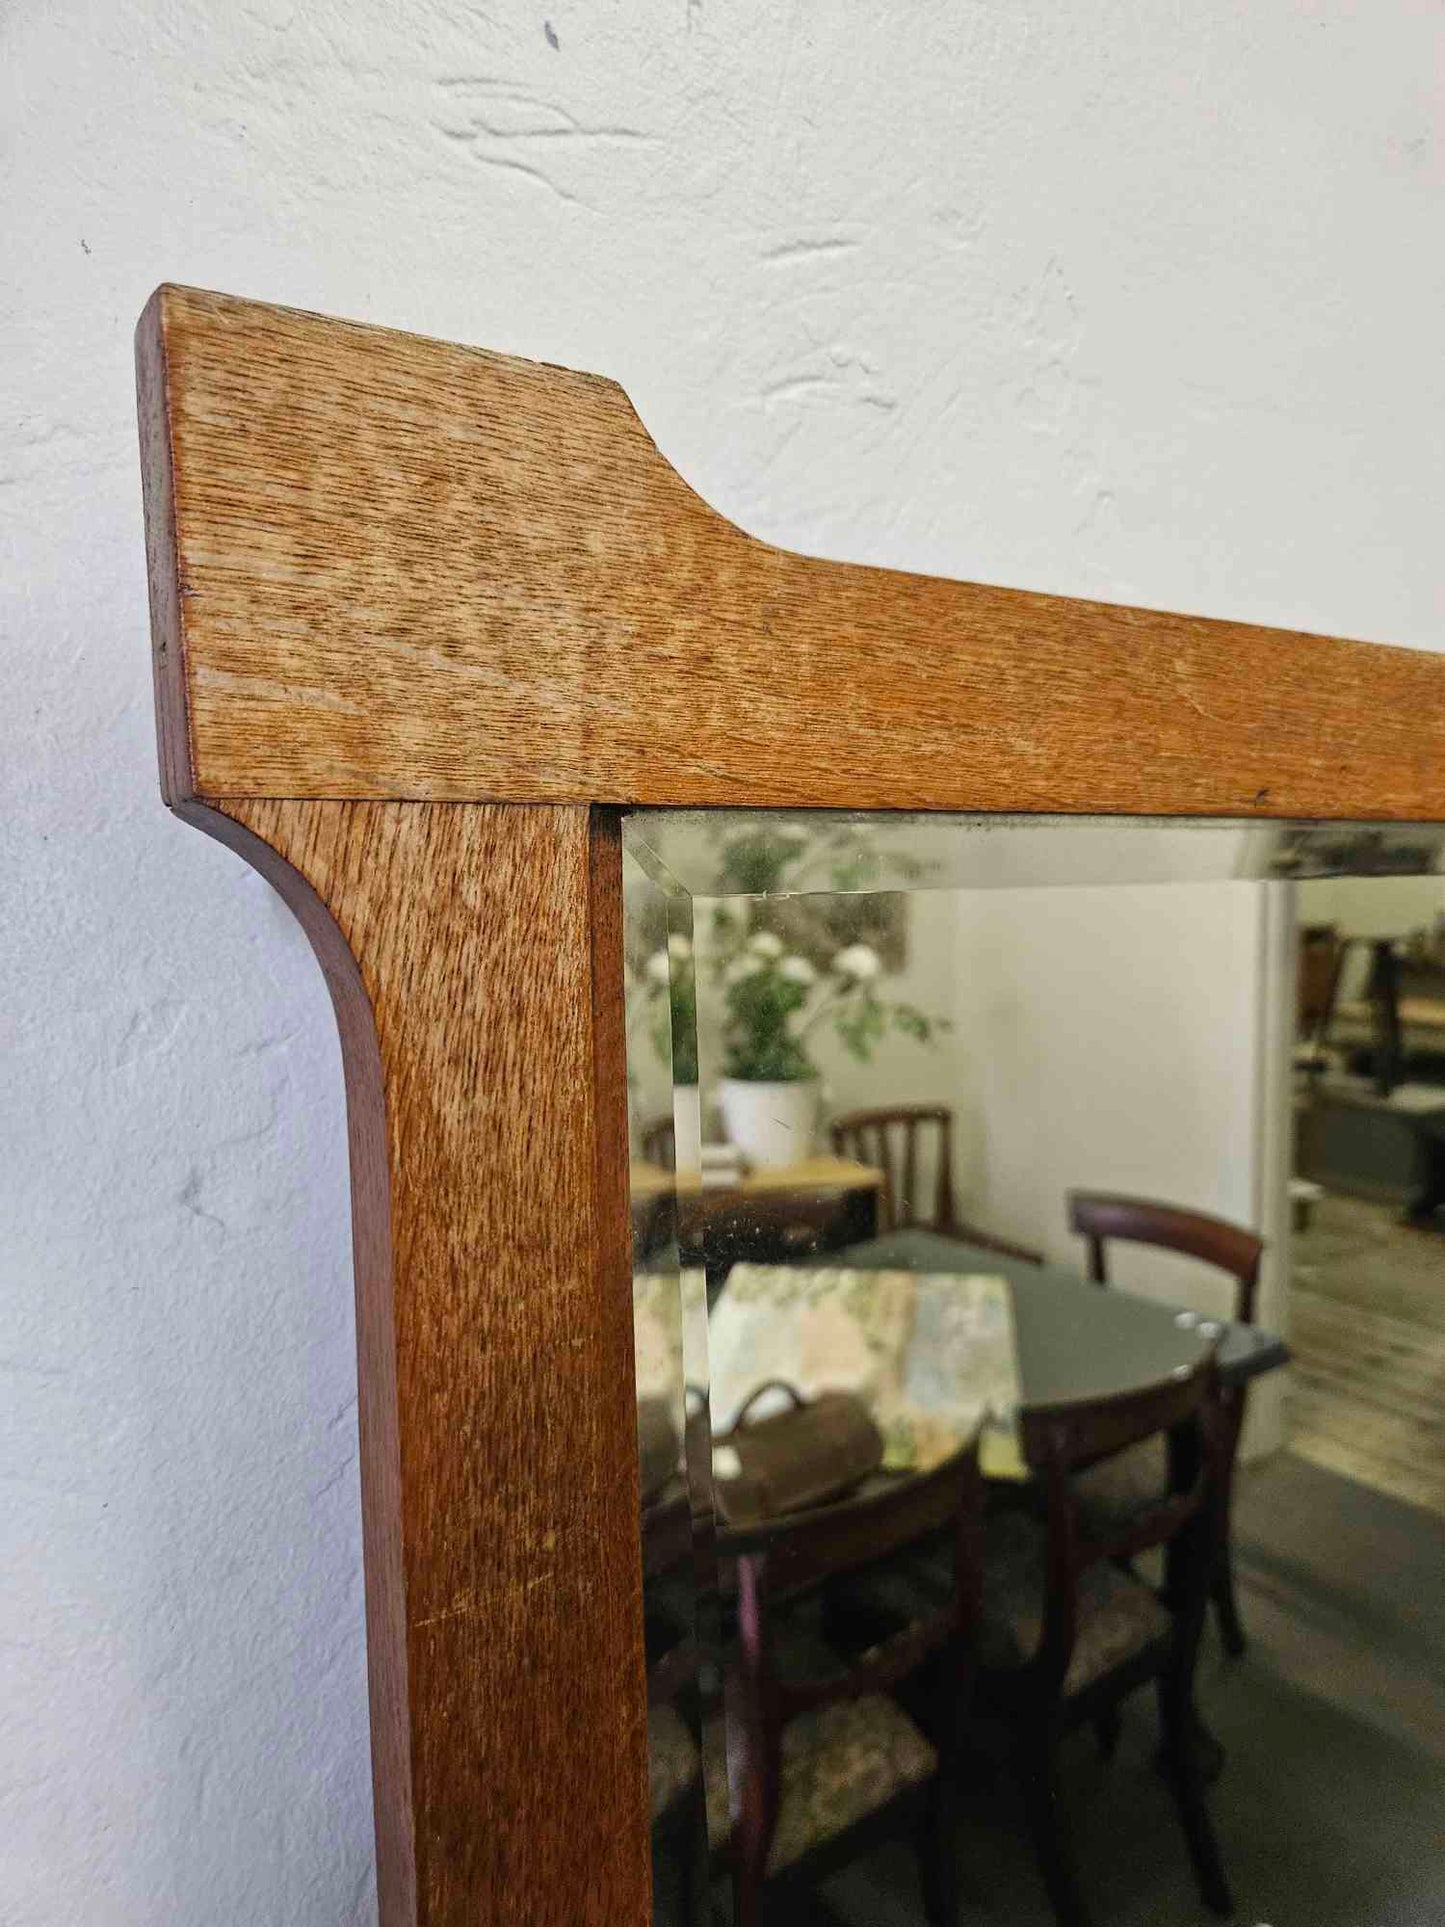 Beveled mirror in wooden frame